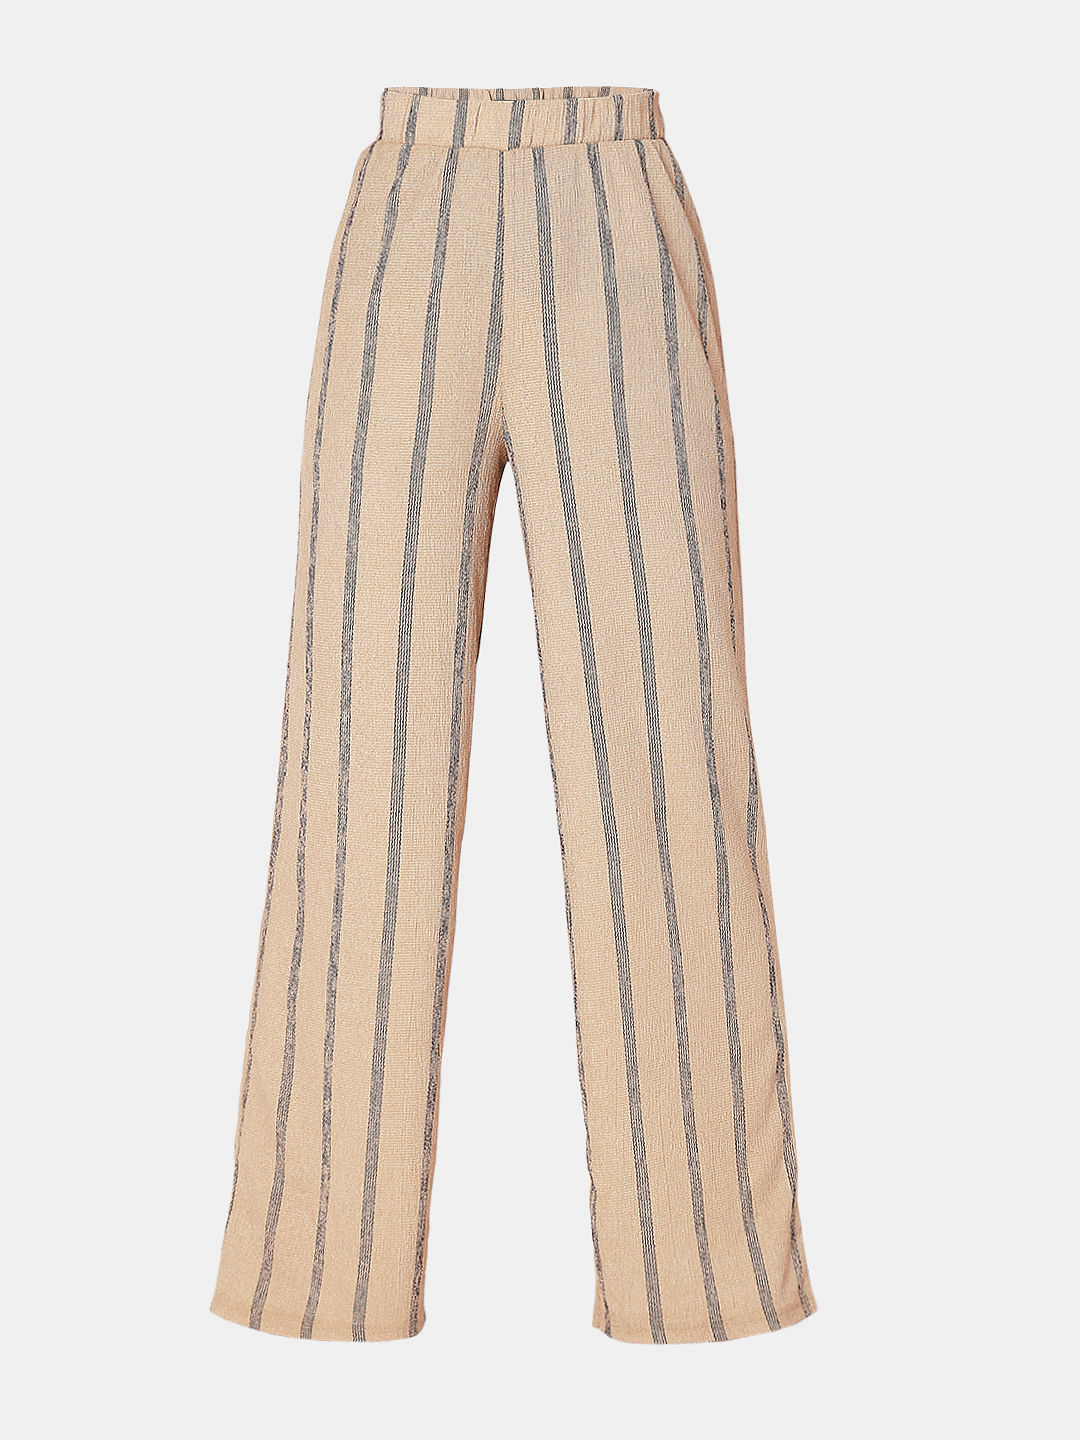 MultiStriped Striped Wide Leg Pants X38181  Striped wide leg pants Wide  leg pants outfit Big leg pants